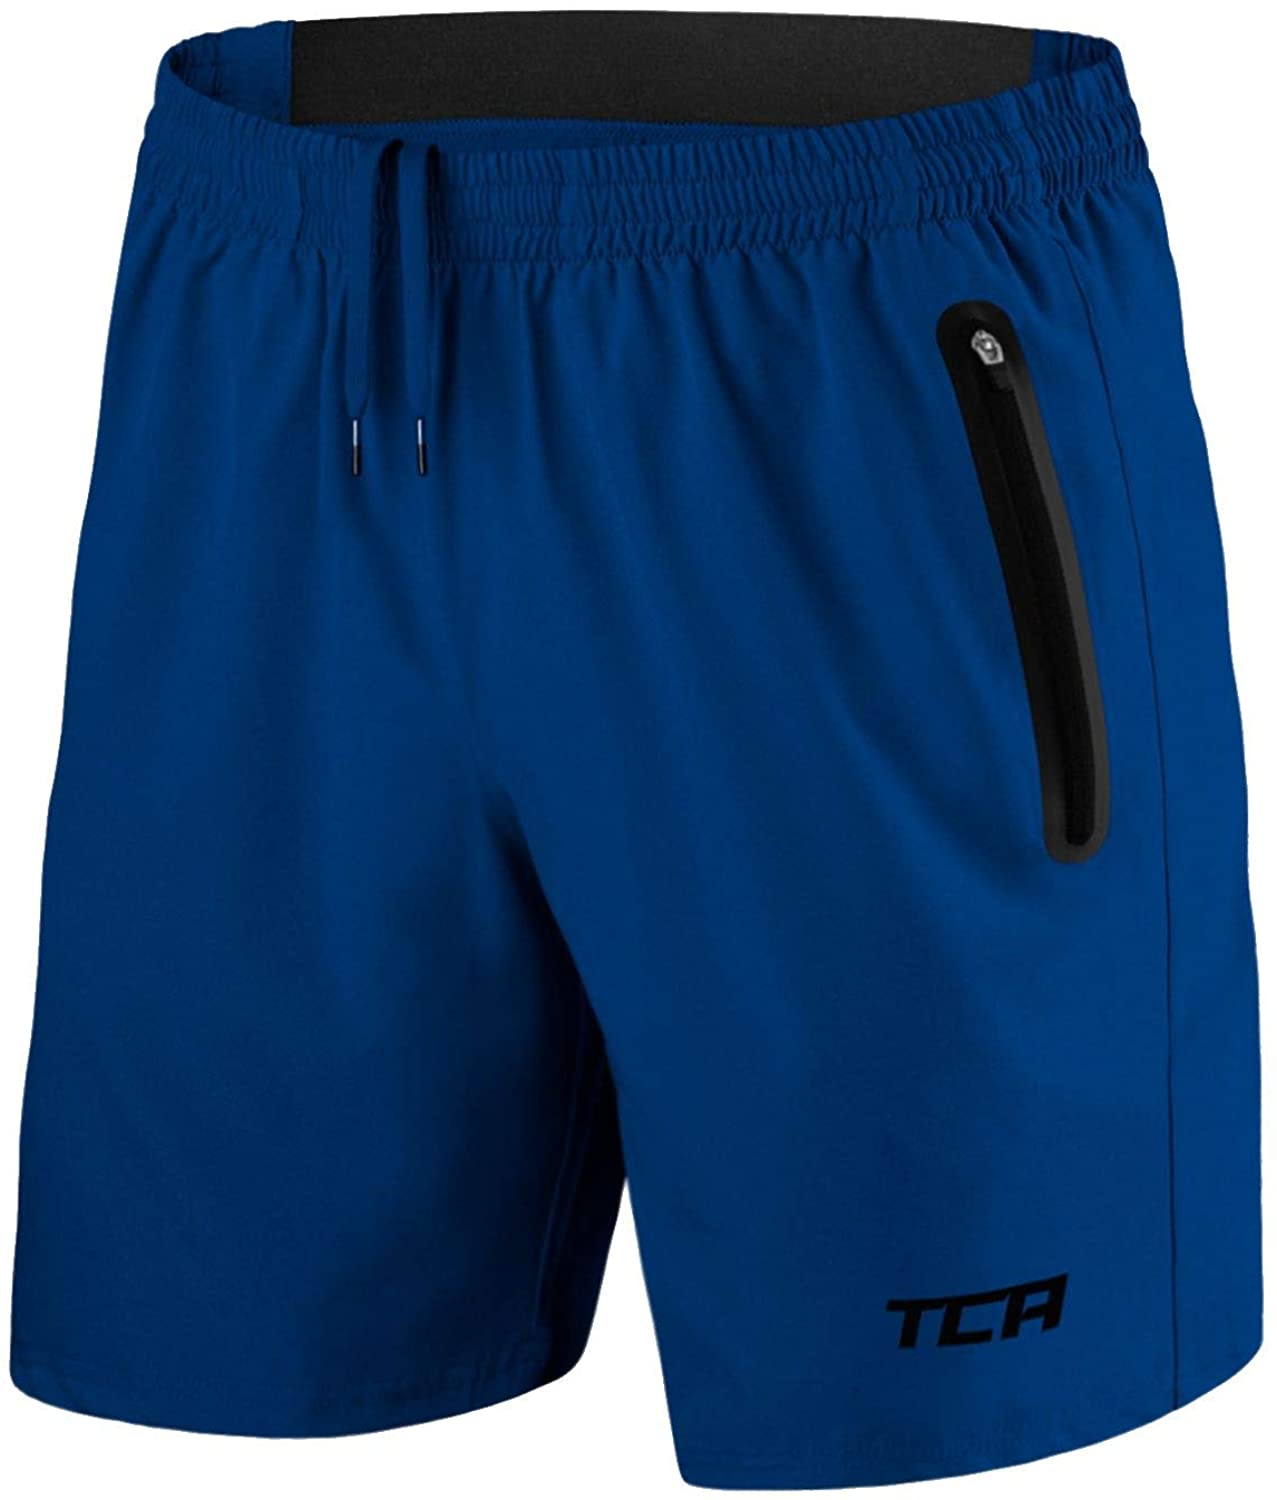 Men's Shorts Zip Pockets TCA Running Training Gym CrossFit Fitness 